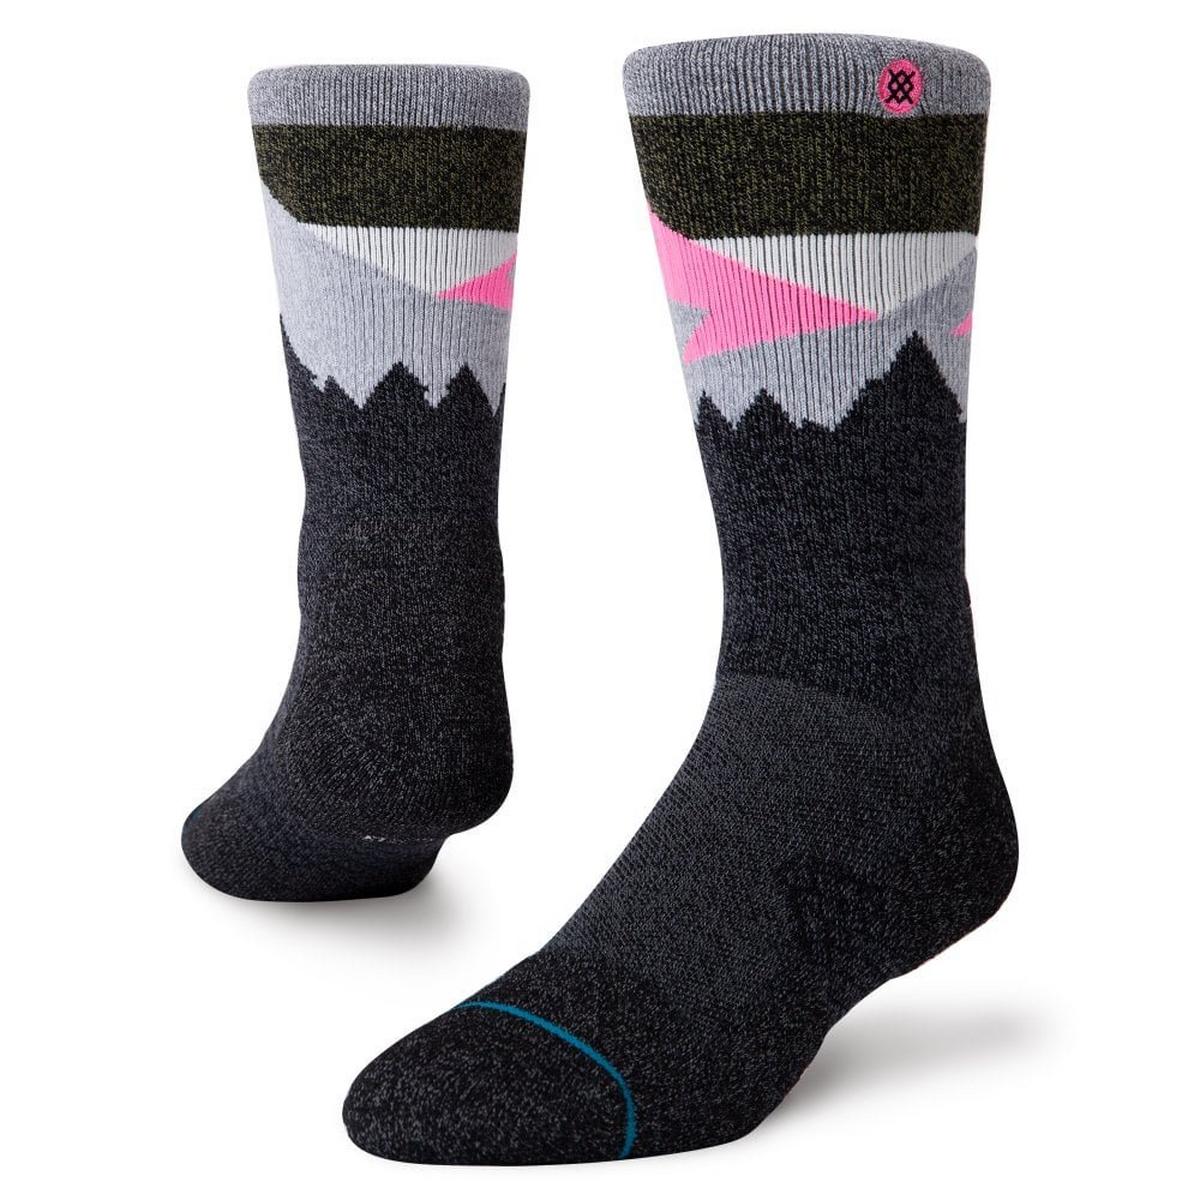 Stance Women's Stance Divide ST Socks - Grey